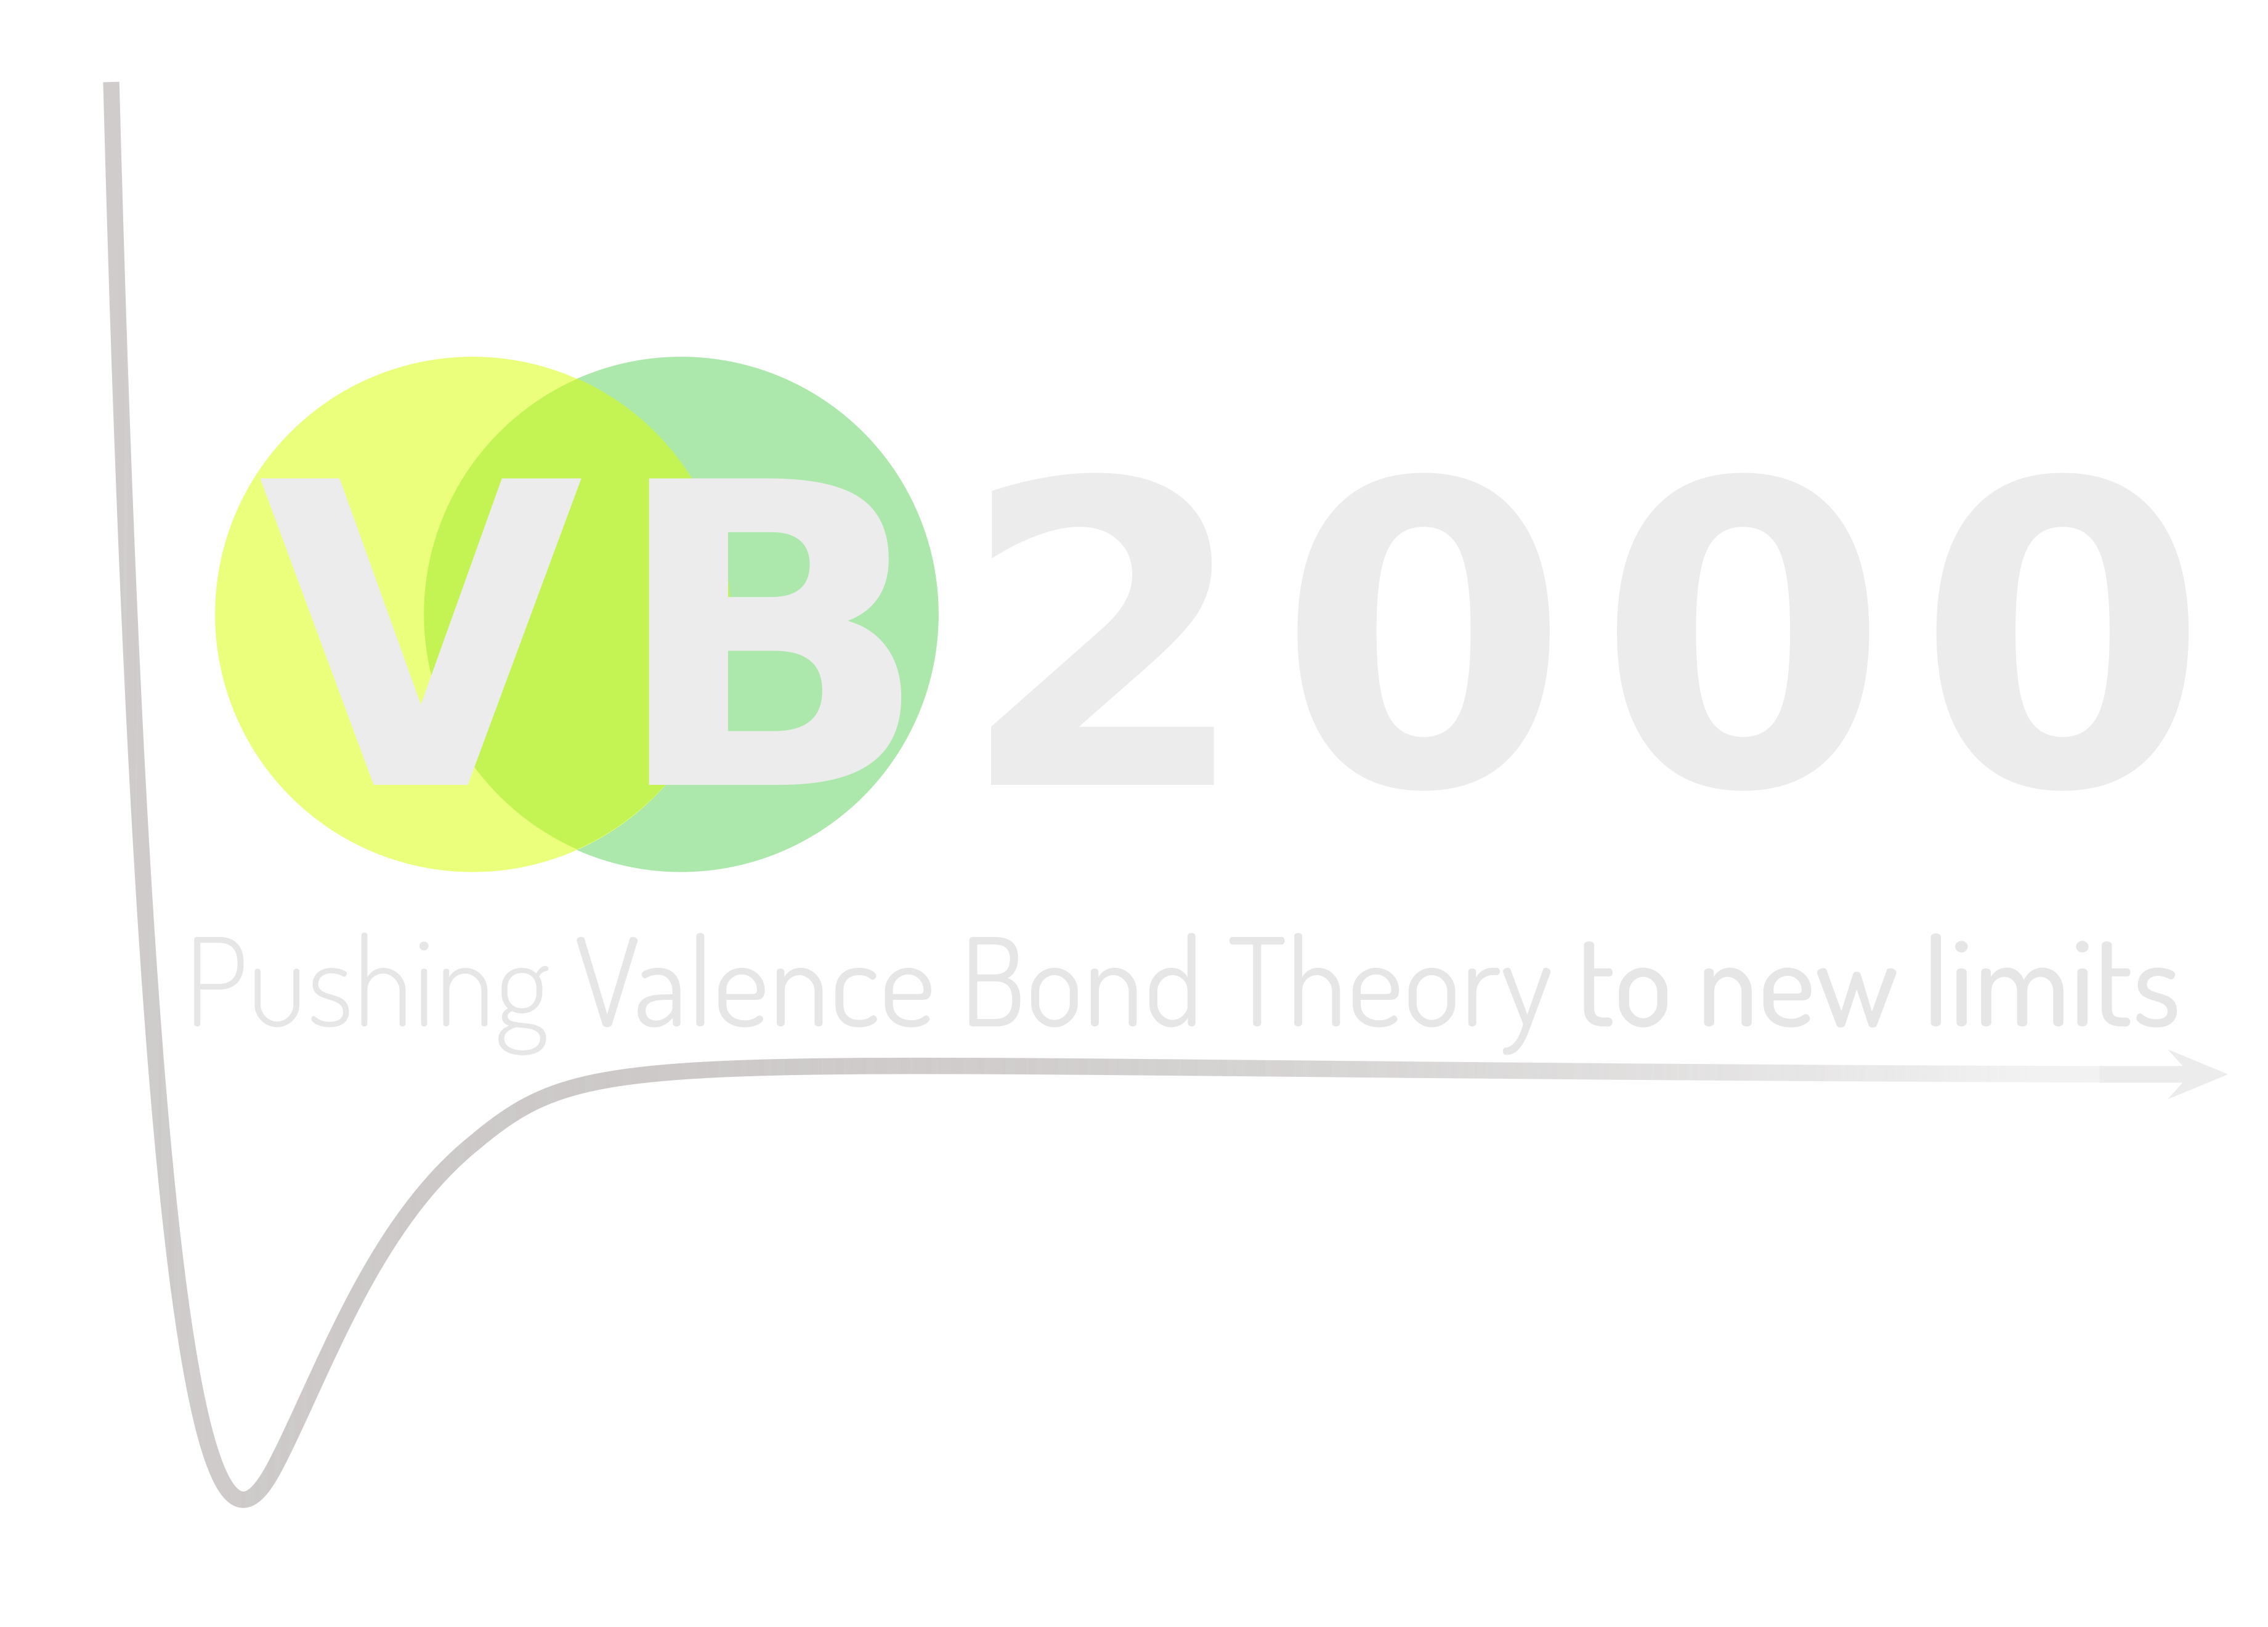 VB2000 Logo. Pushing Valence Bond Theory to New Limits